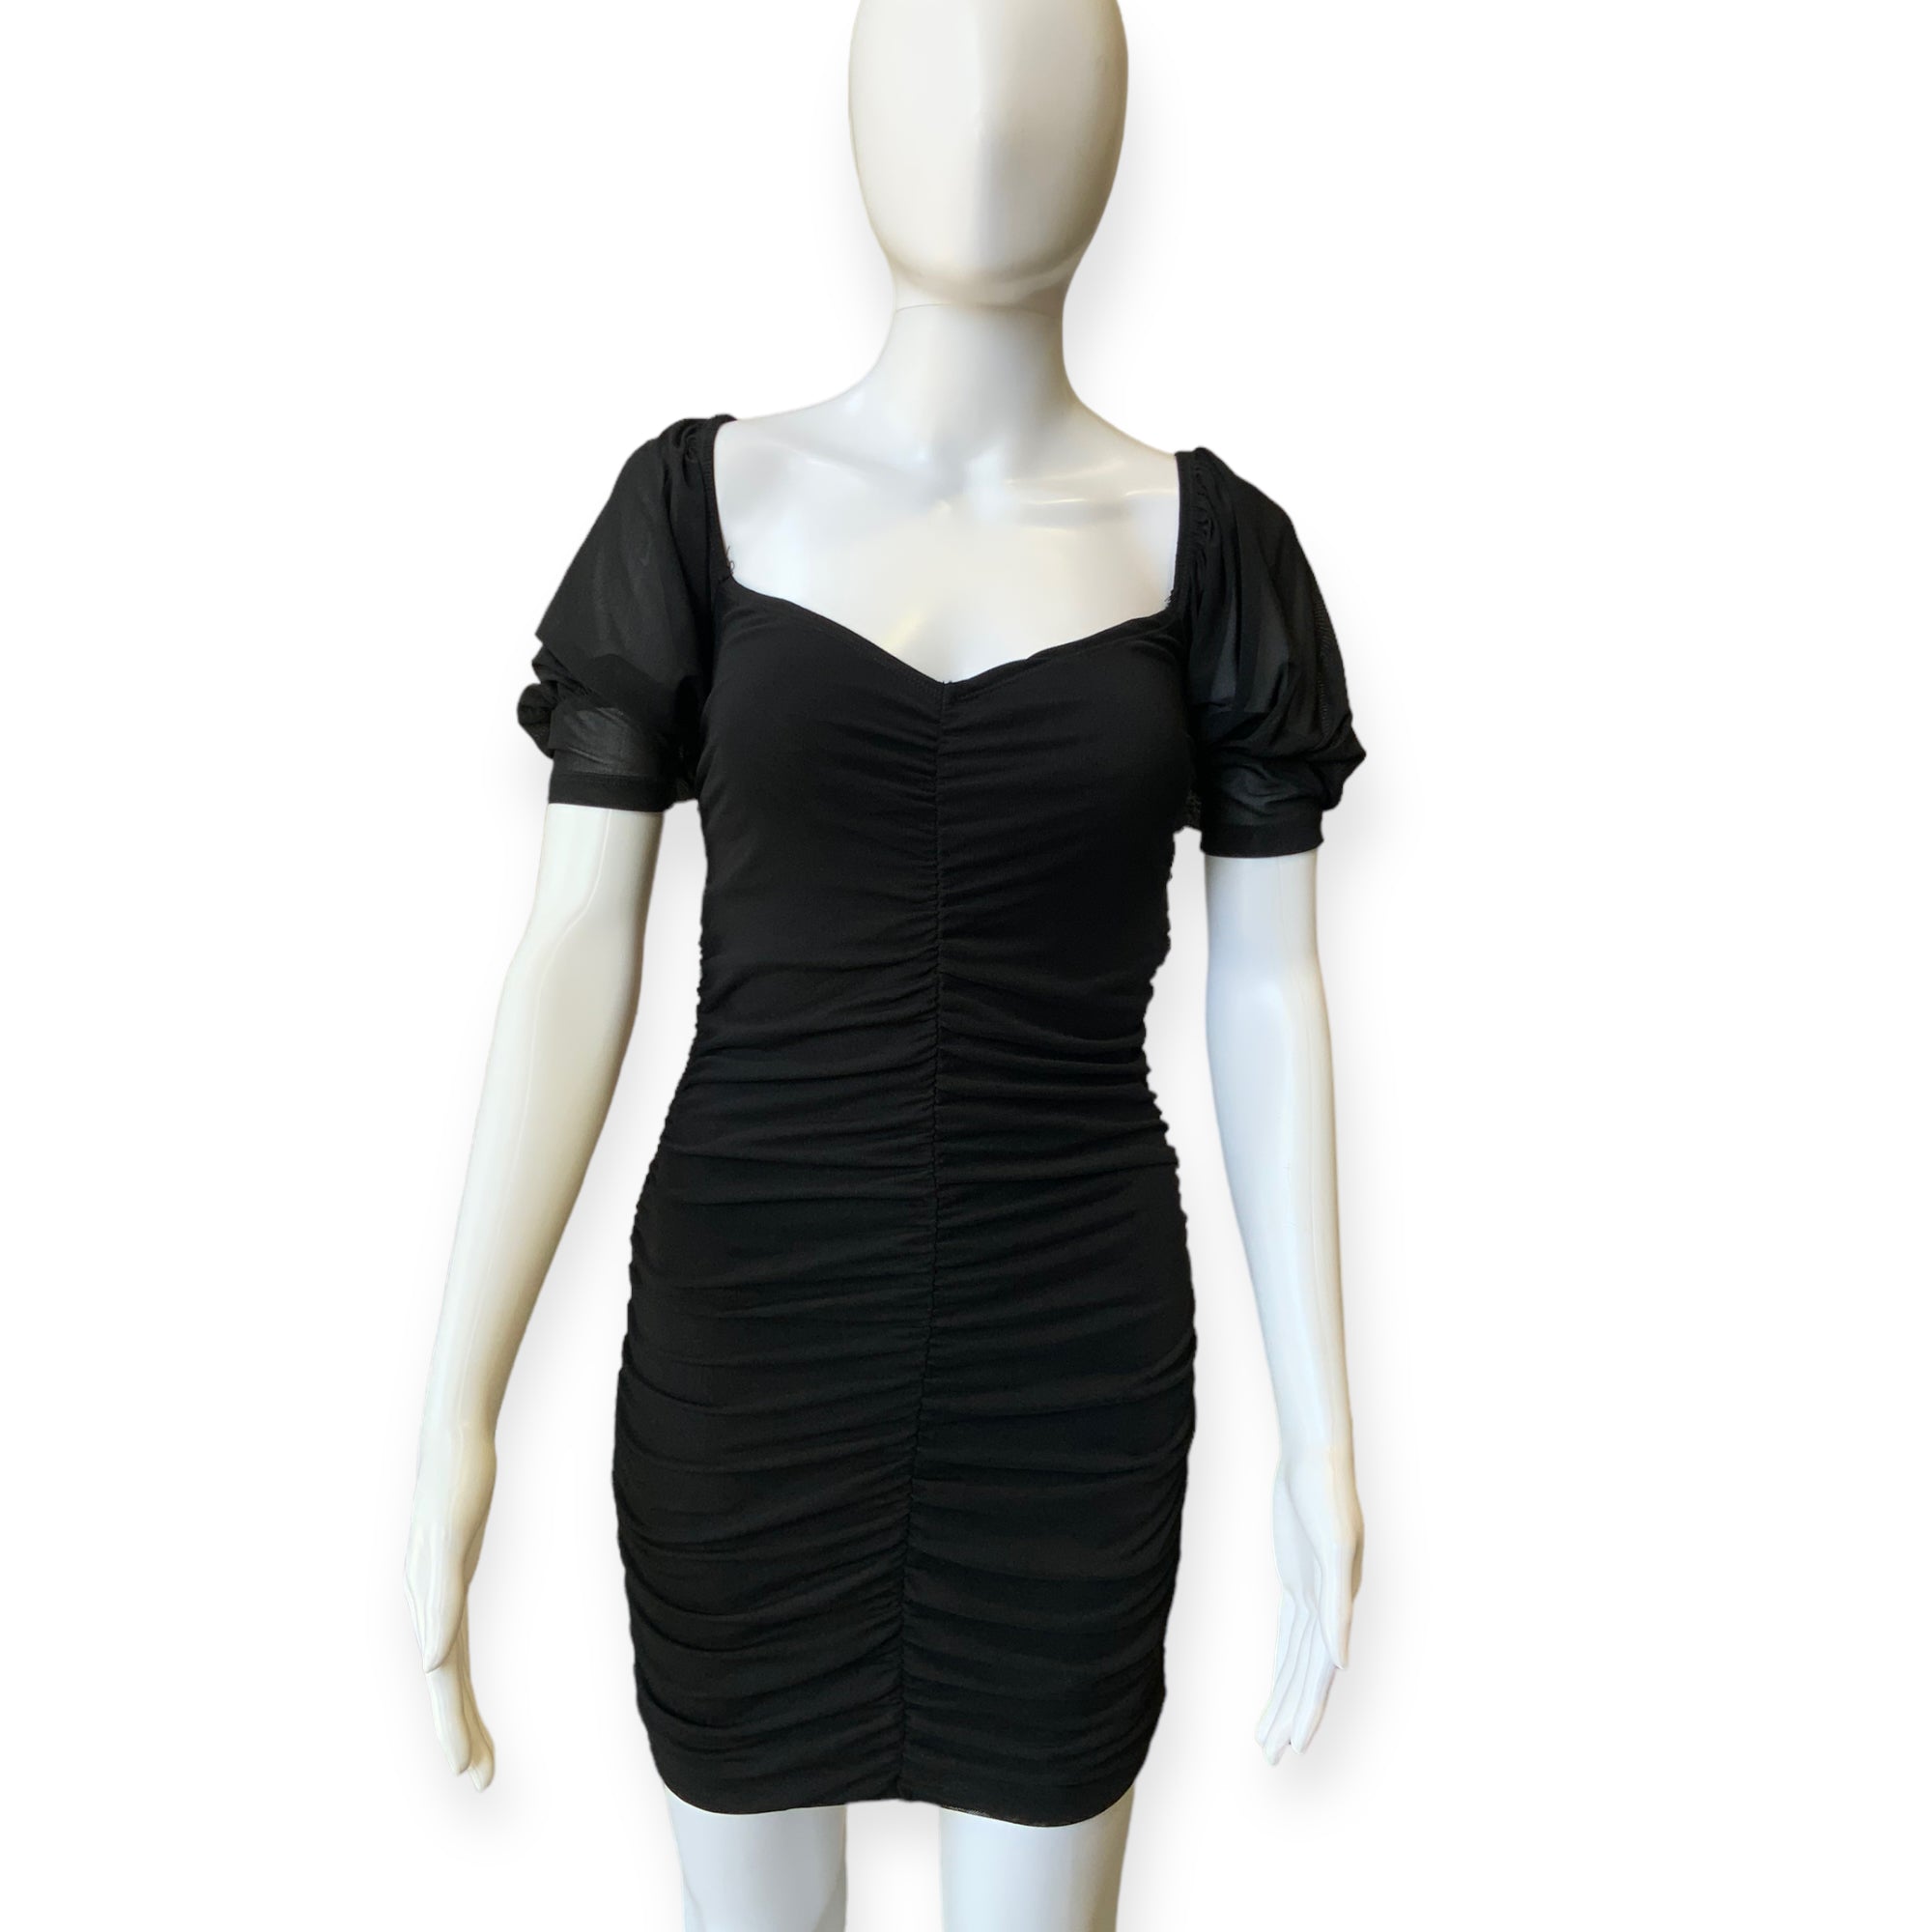 BNWT BLOSSOM Black Slinky Sweetheart Neck Puff Sleeve Club Dress - Size 8